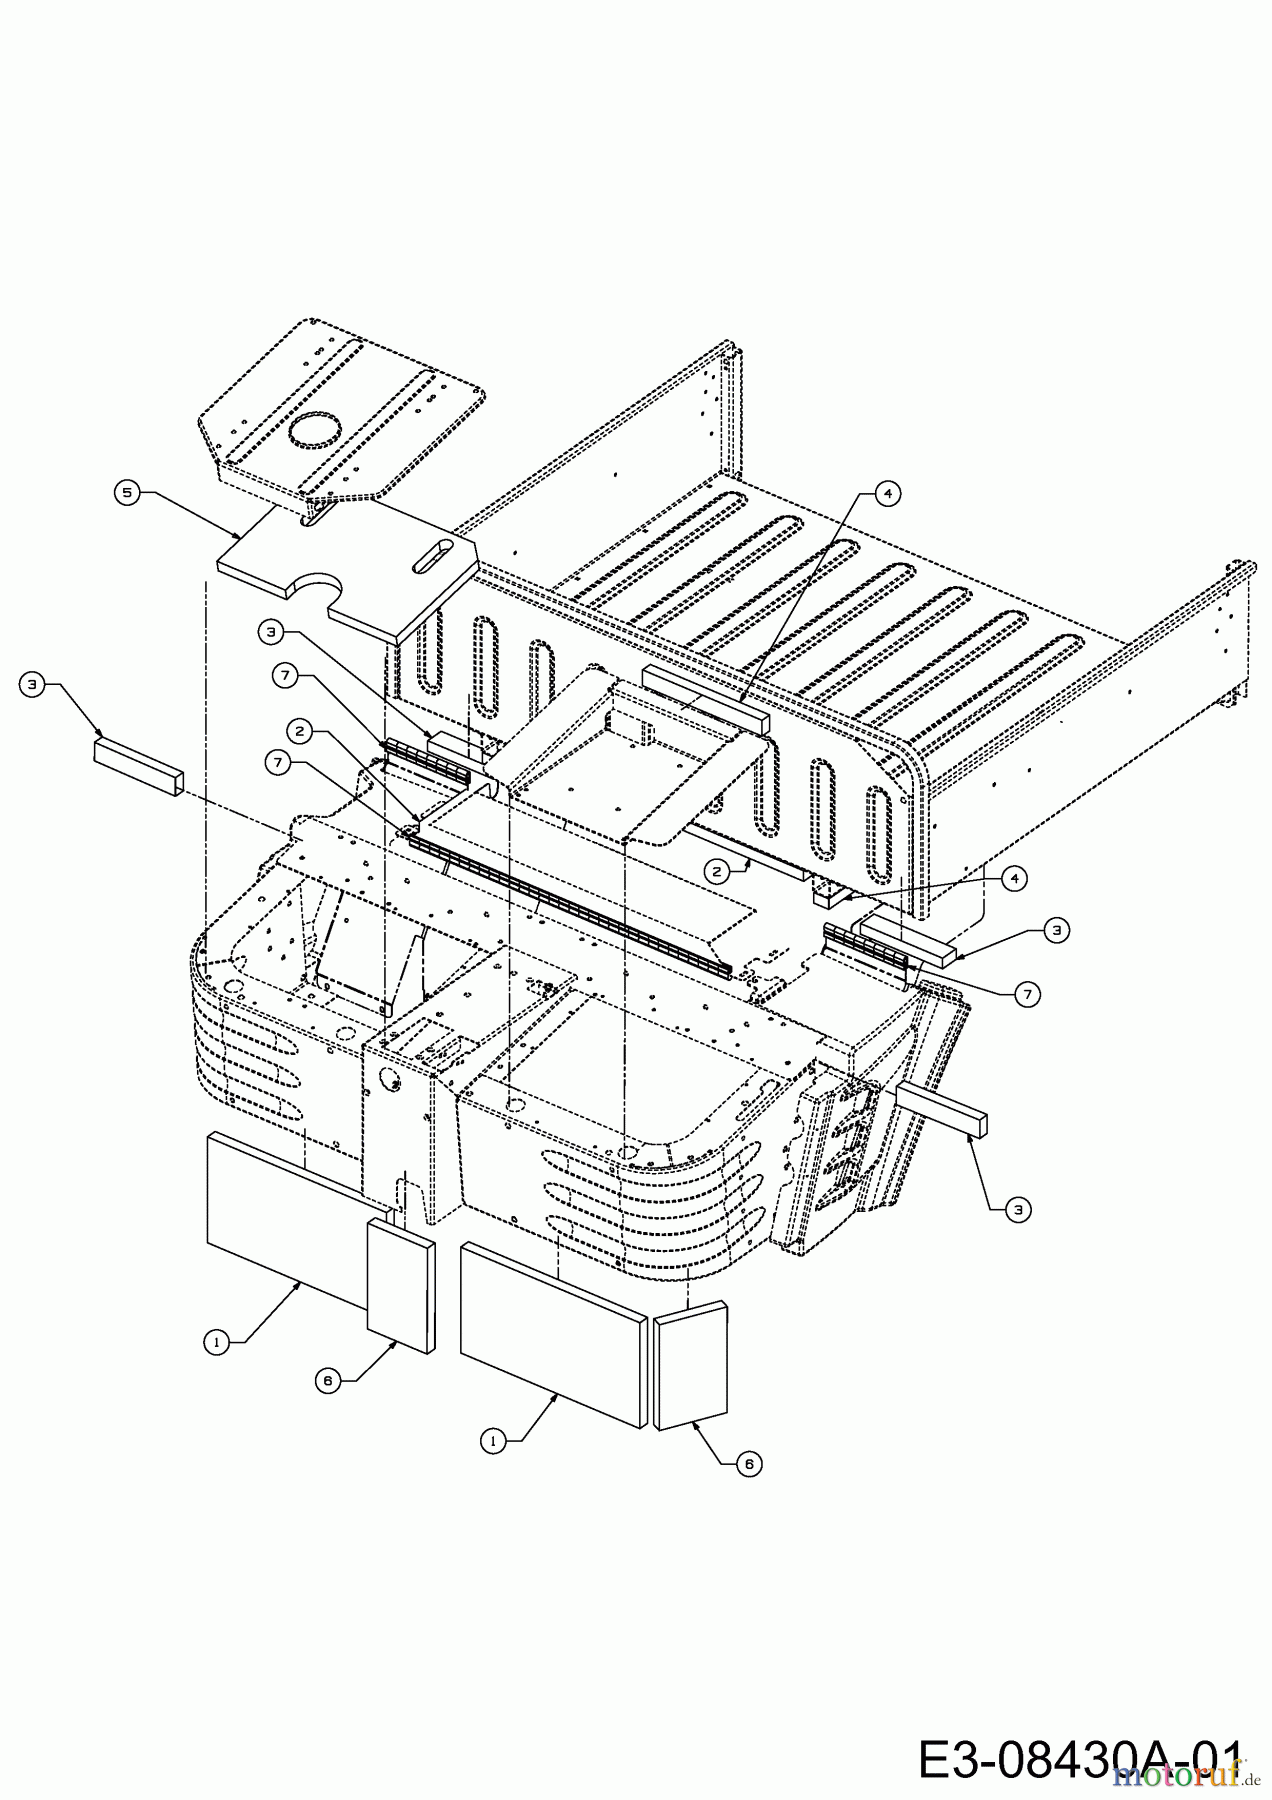  Massey Ferguson Utility Vehicle MF 20 MD 37AK468D695  (2017) Sound Insulation